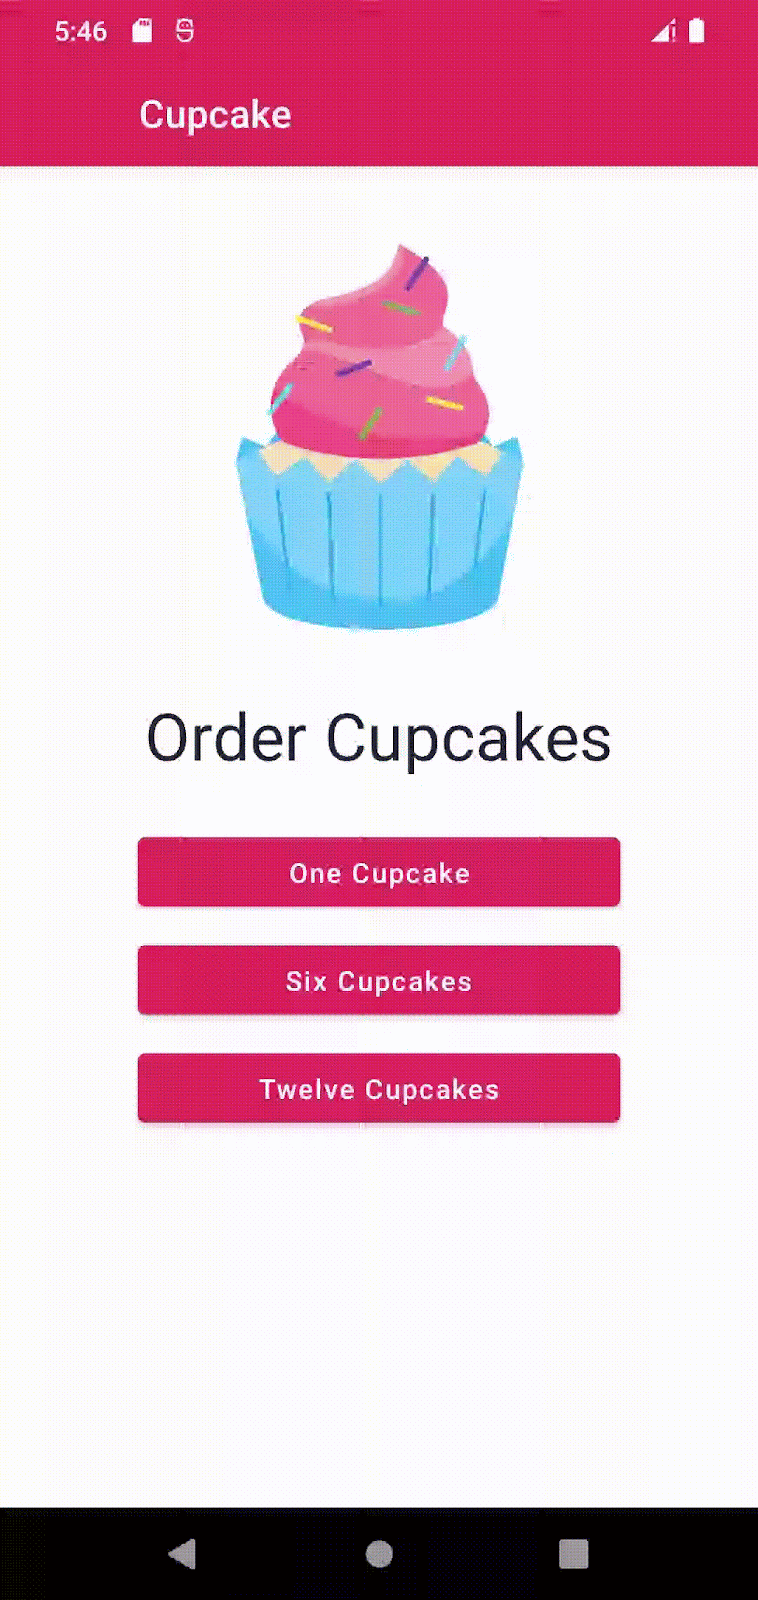 Animasi yang menunjukkan pengguna membuka setiap layar di aplikasi Cupcake yang telah selesai.